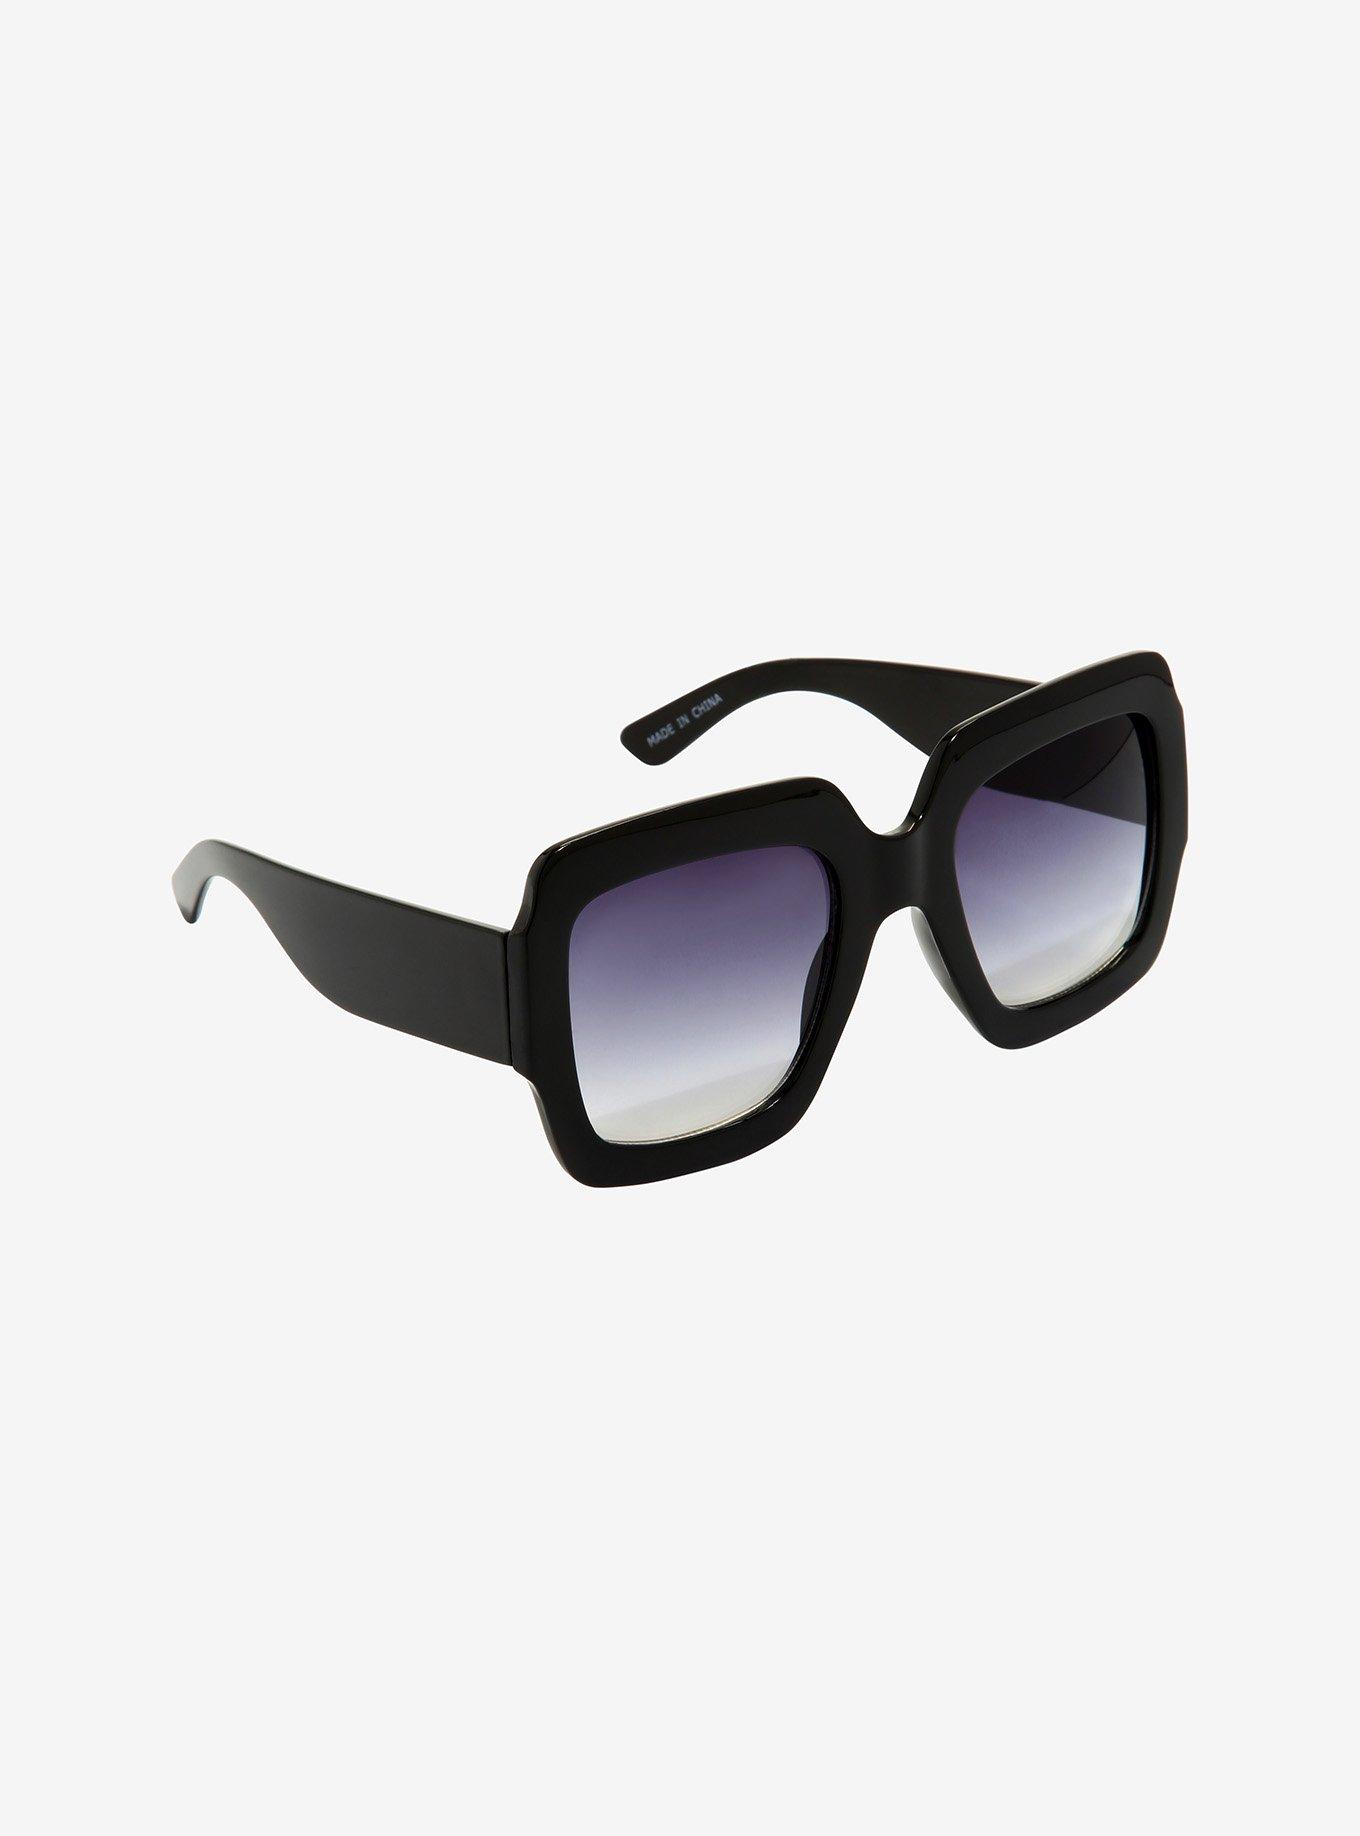 Black Square Oversized Sunglasses, , hi-res